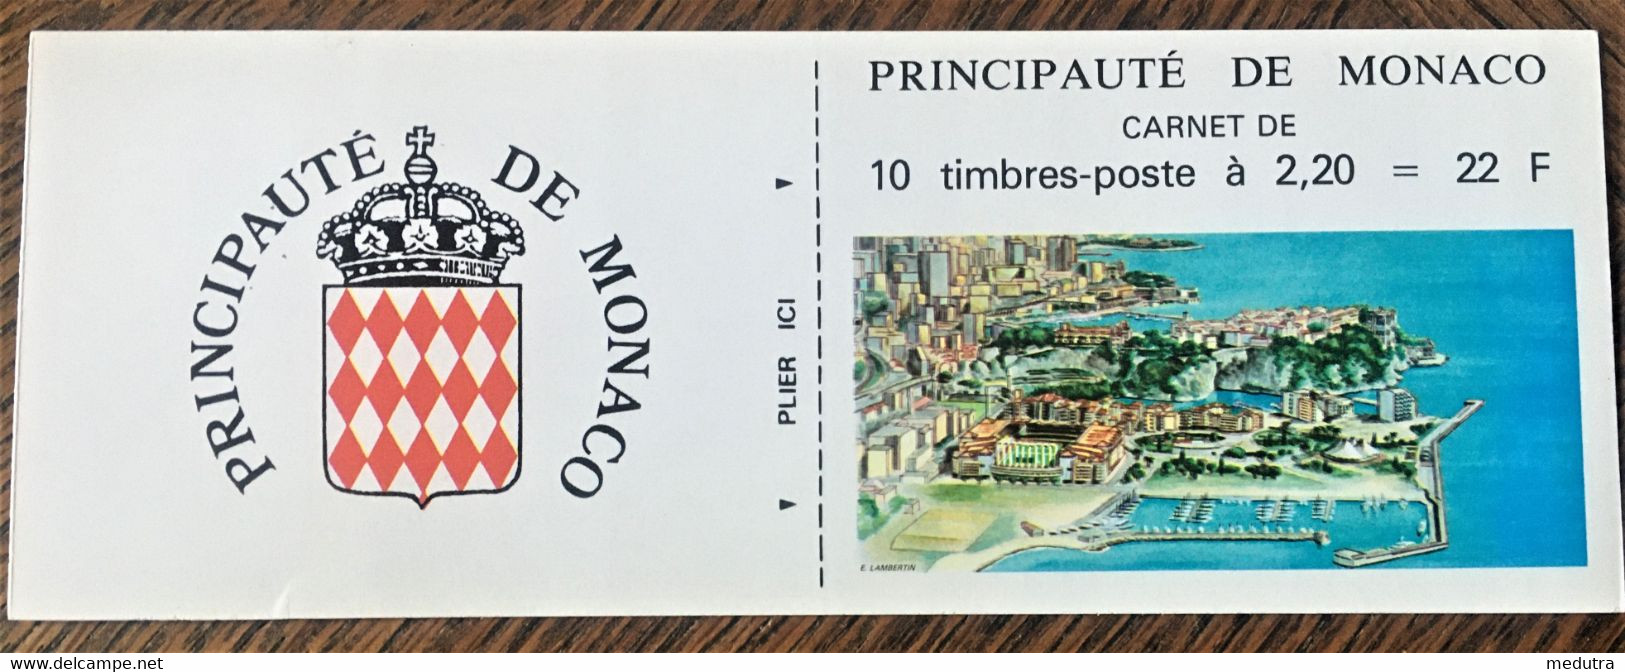 Monaco 12 BC neufs (n°1,3,4,5,6,7,8,9,10,11,12,14)